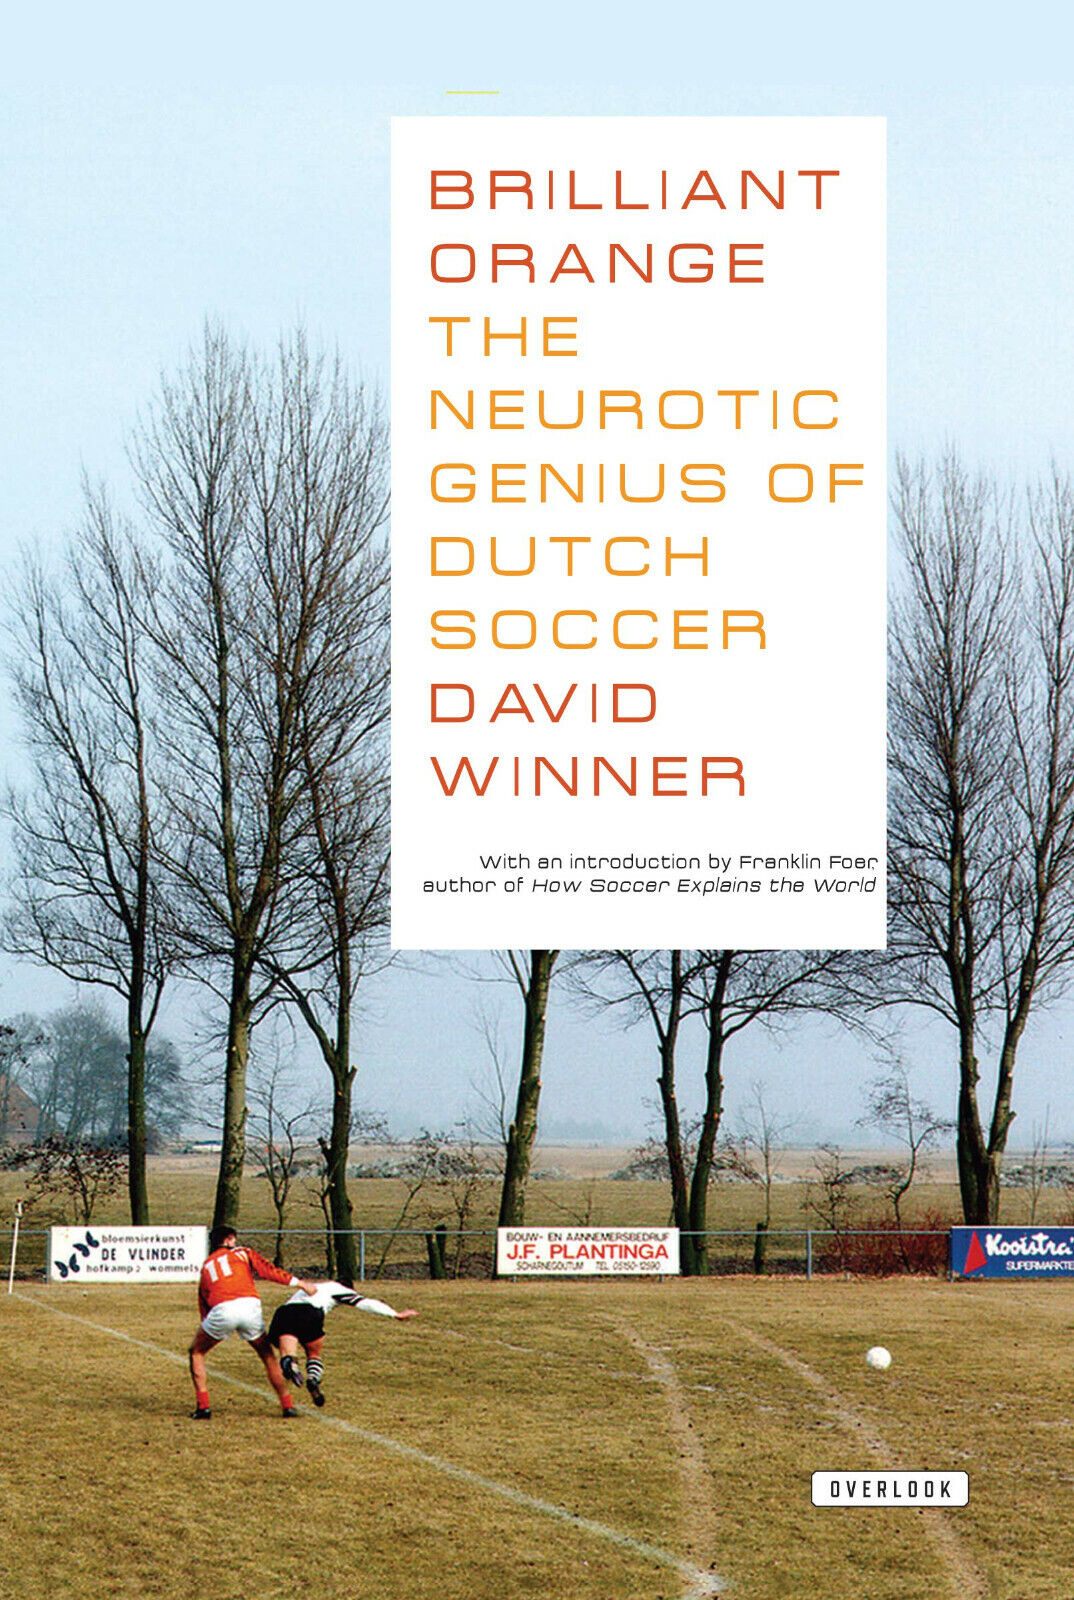 Brilliant Orange: The Neurotic Genius of Dutch Soccer - David Winner - 2008